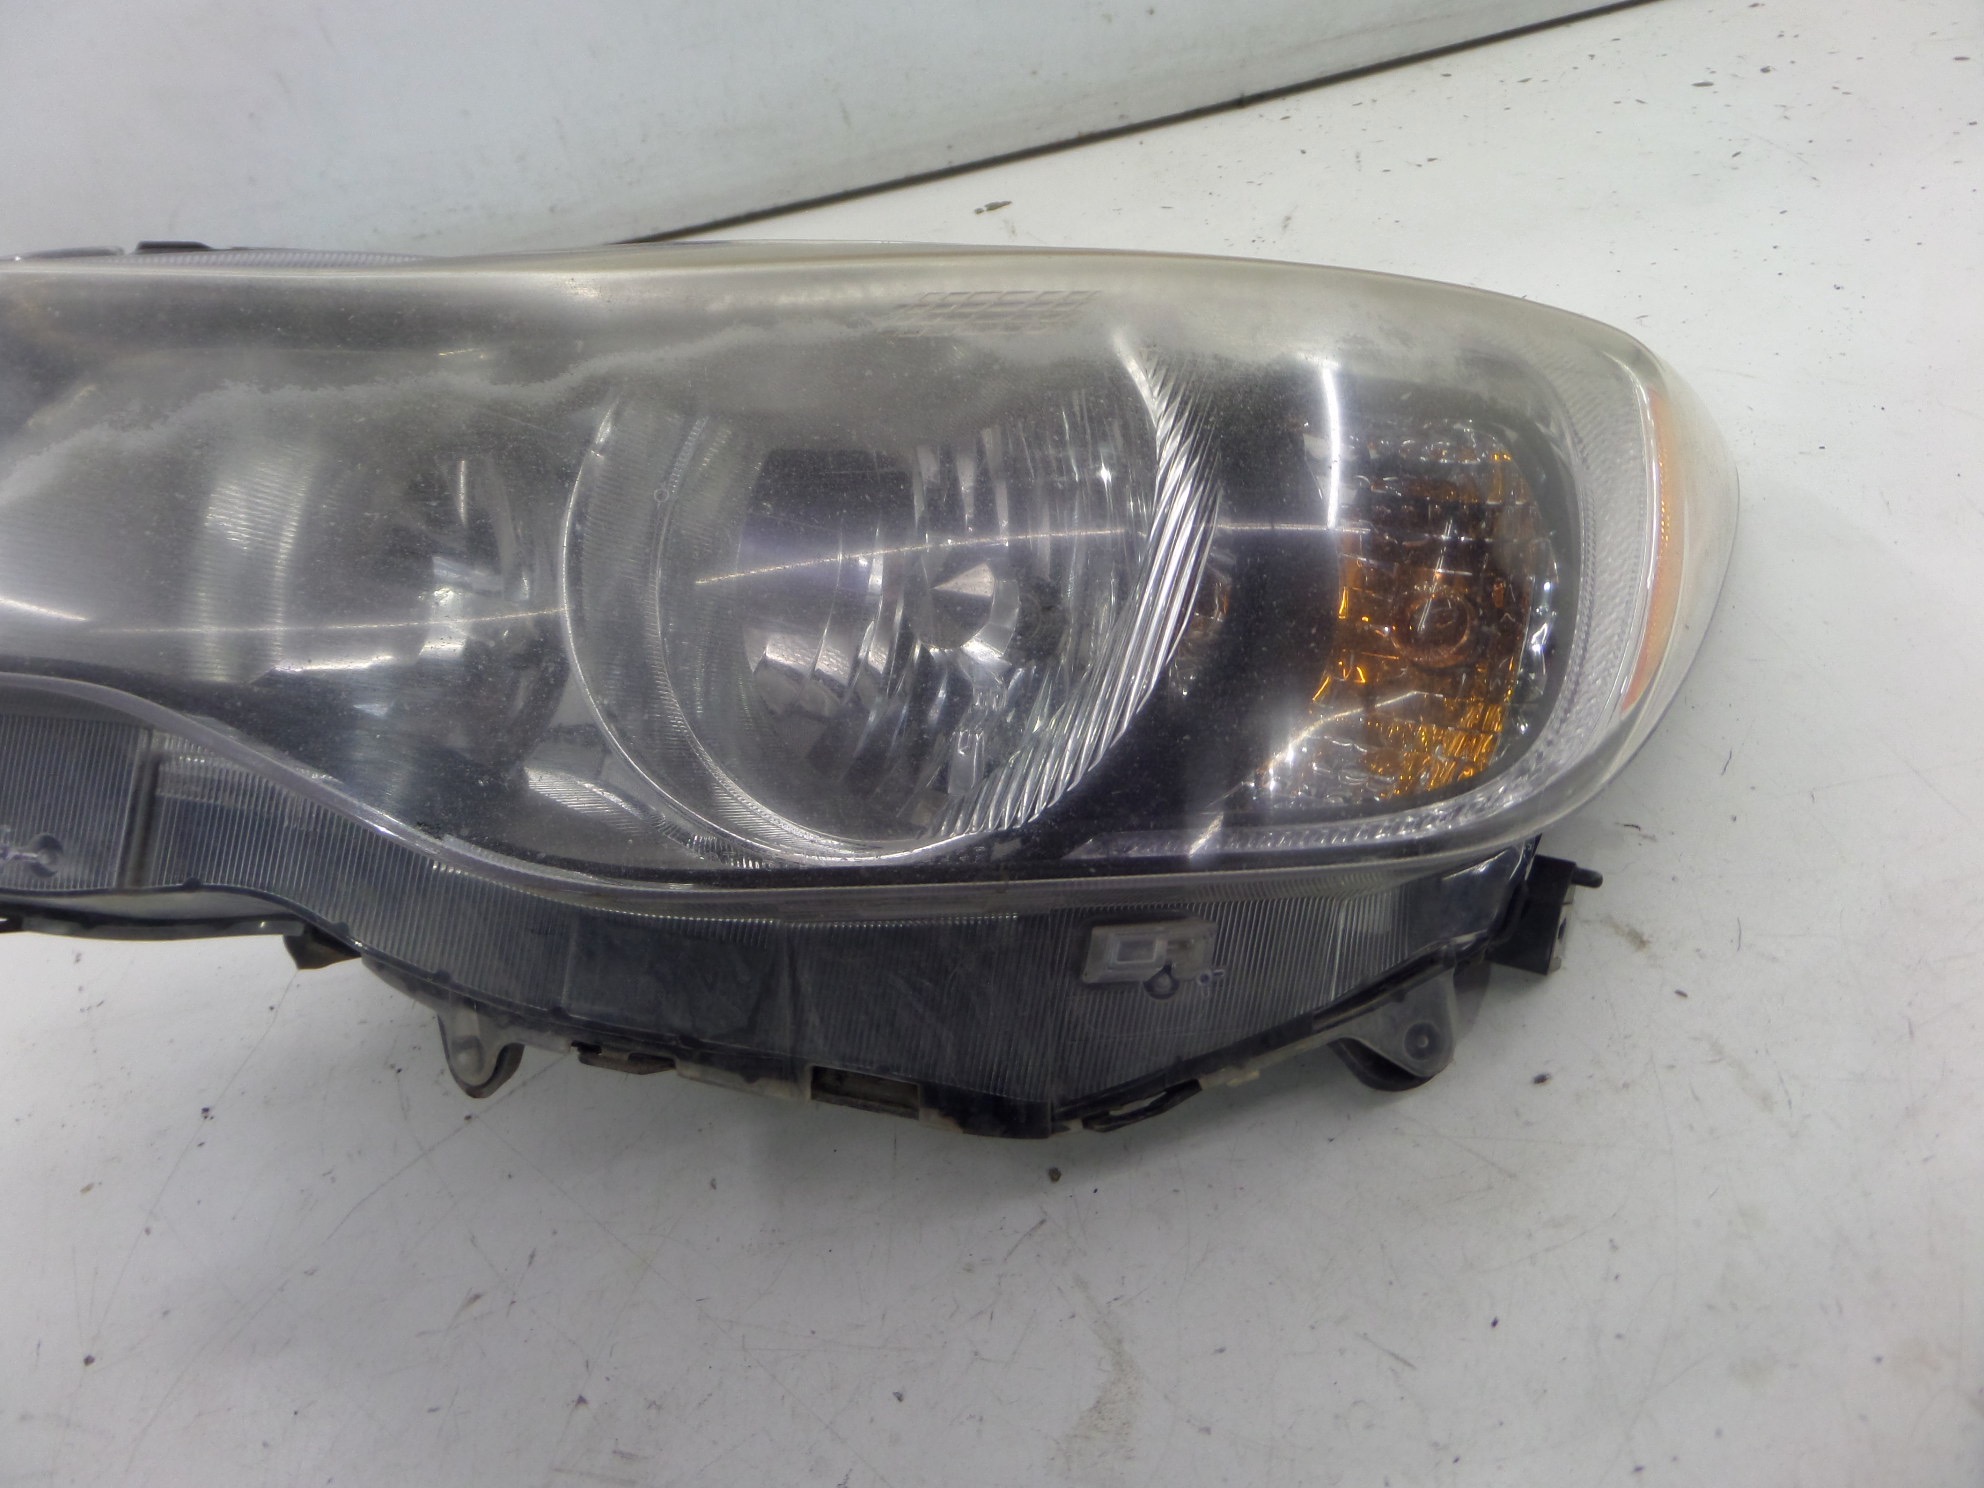 Subaru Impreza Left Headlight GH 0814 OEM eBay